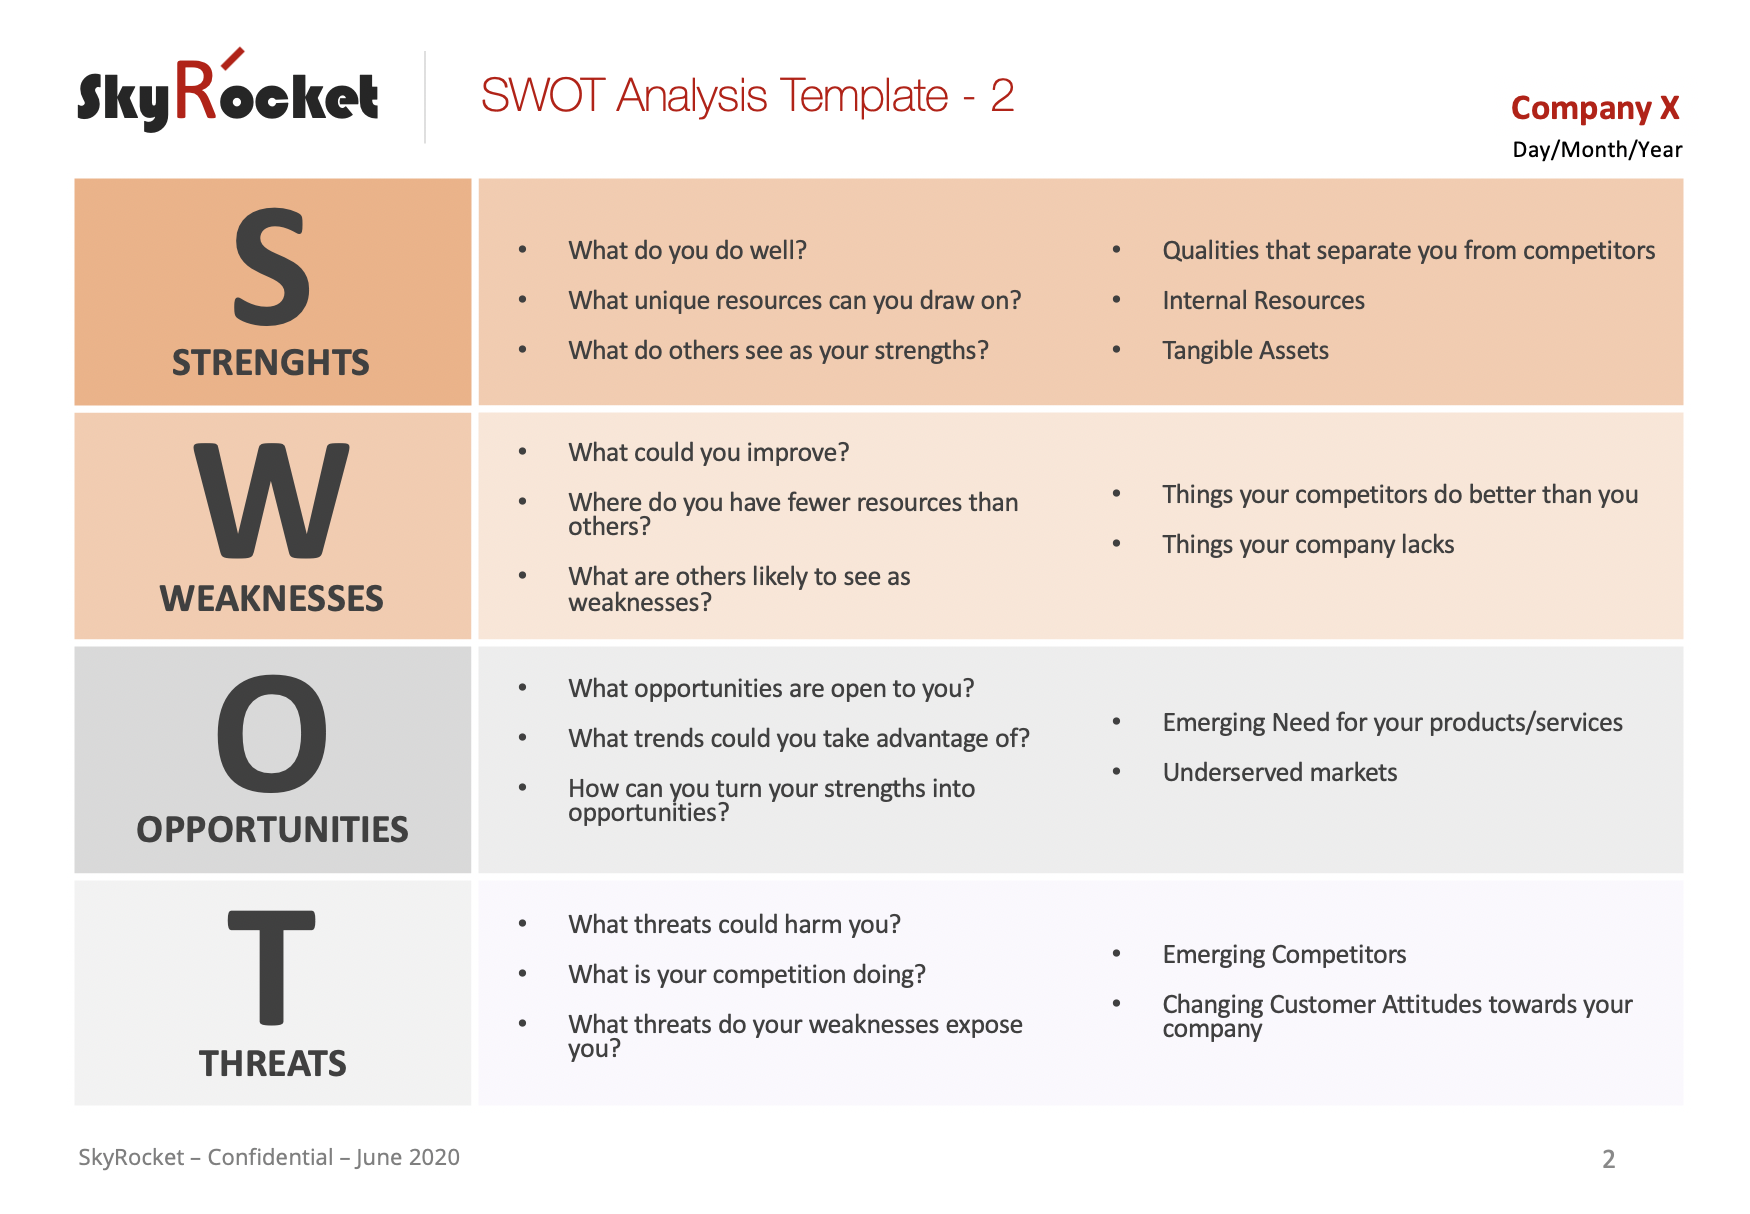 swot analysis strategic planning process